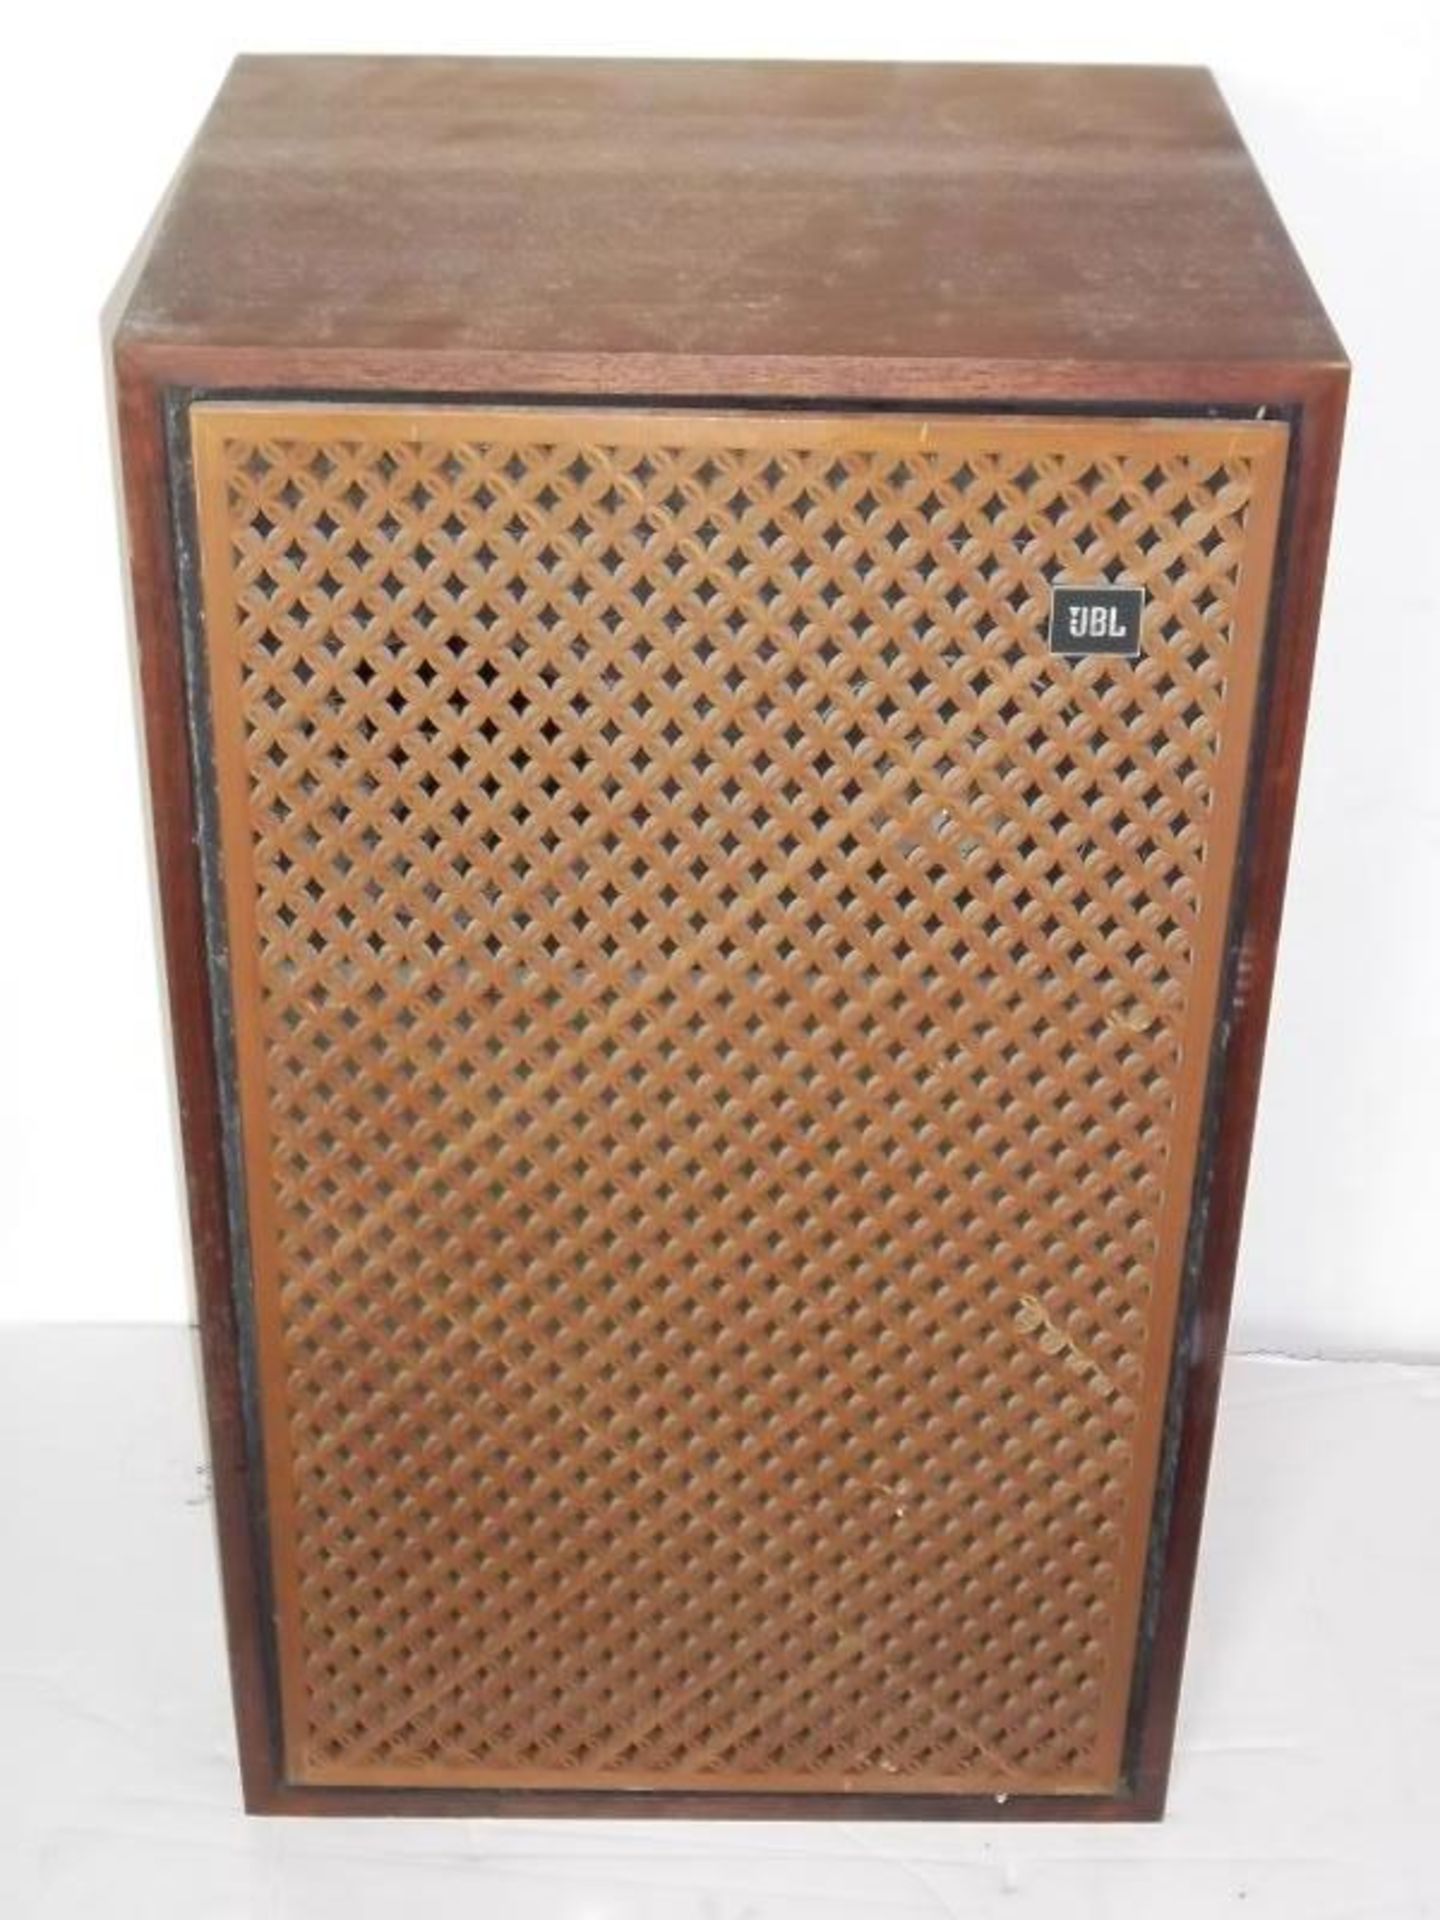 Pr JBL Type S99, Lancer 99 speaker cabinets with speakers, 14" x 11.5" x 23.5" h - Image 4 of 5